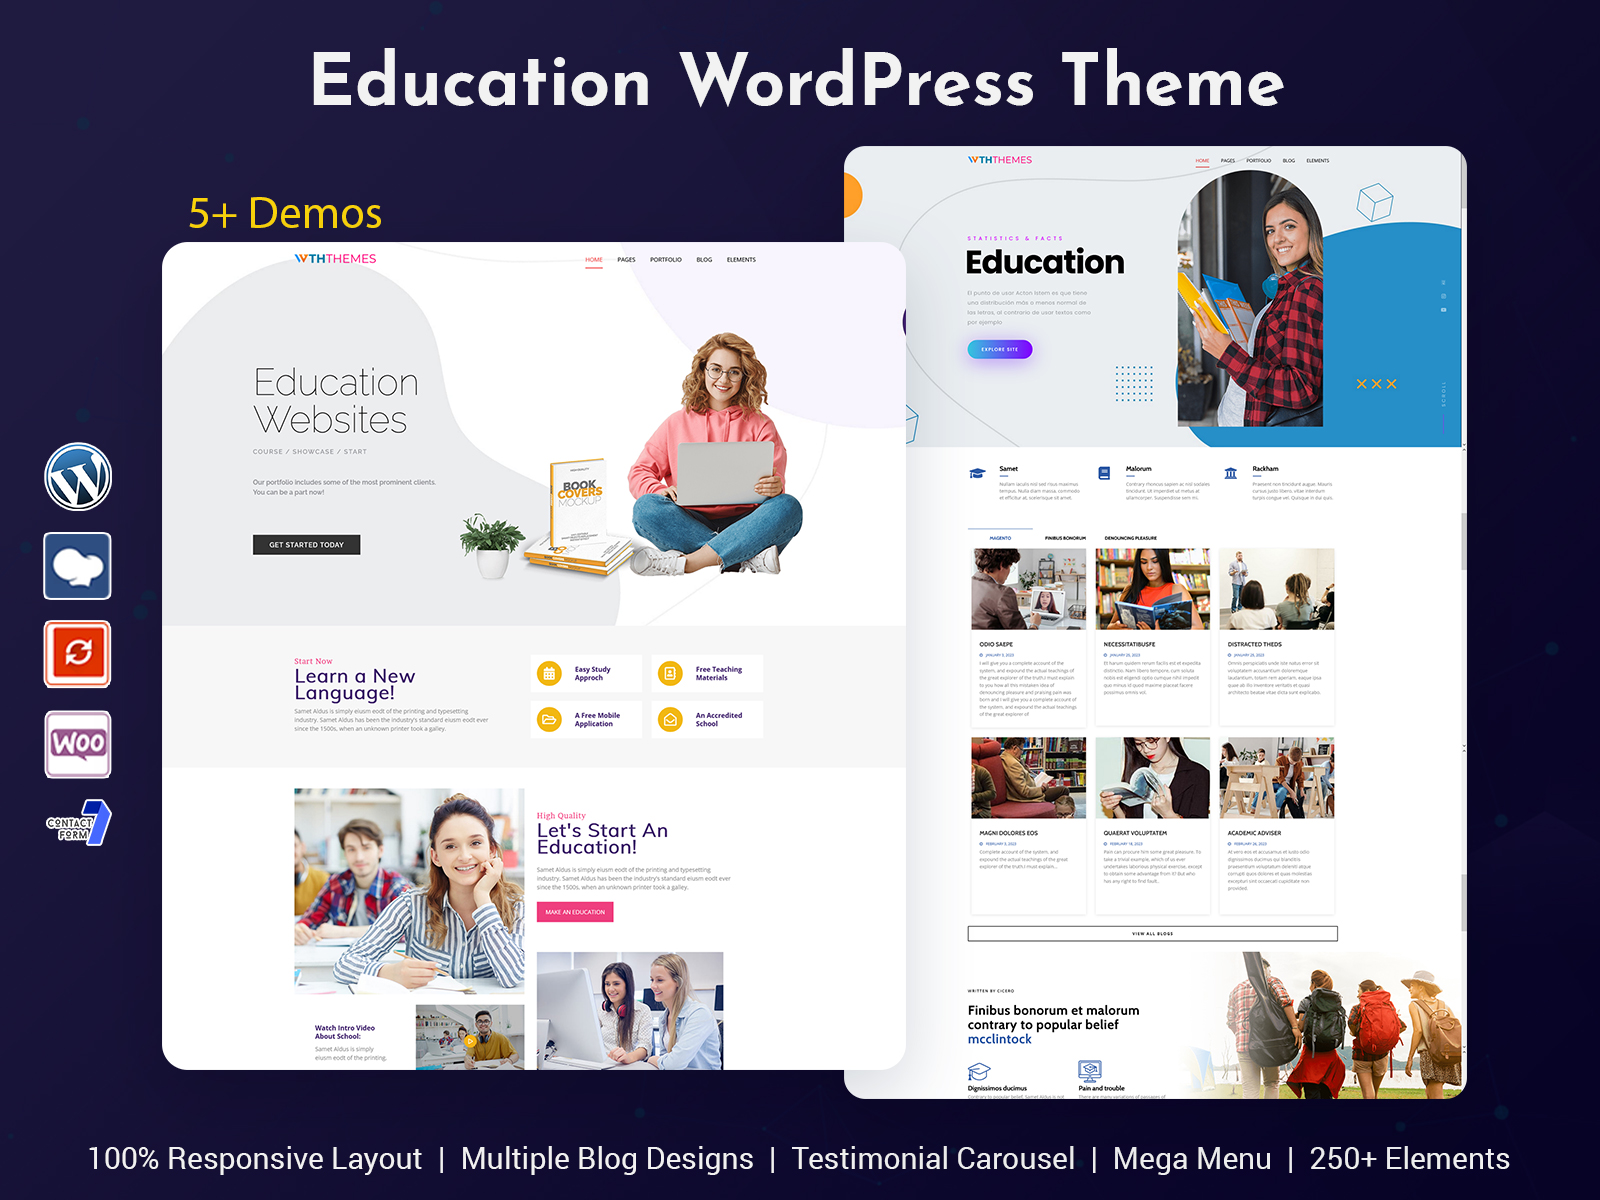 Education WordPress Theme Used For Online Education Websites